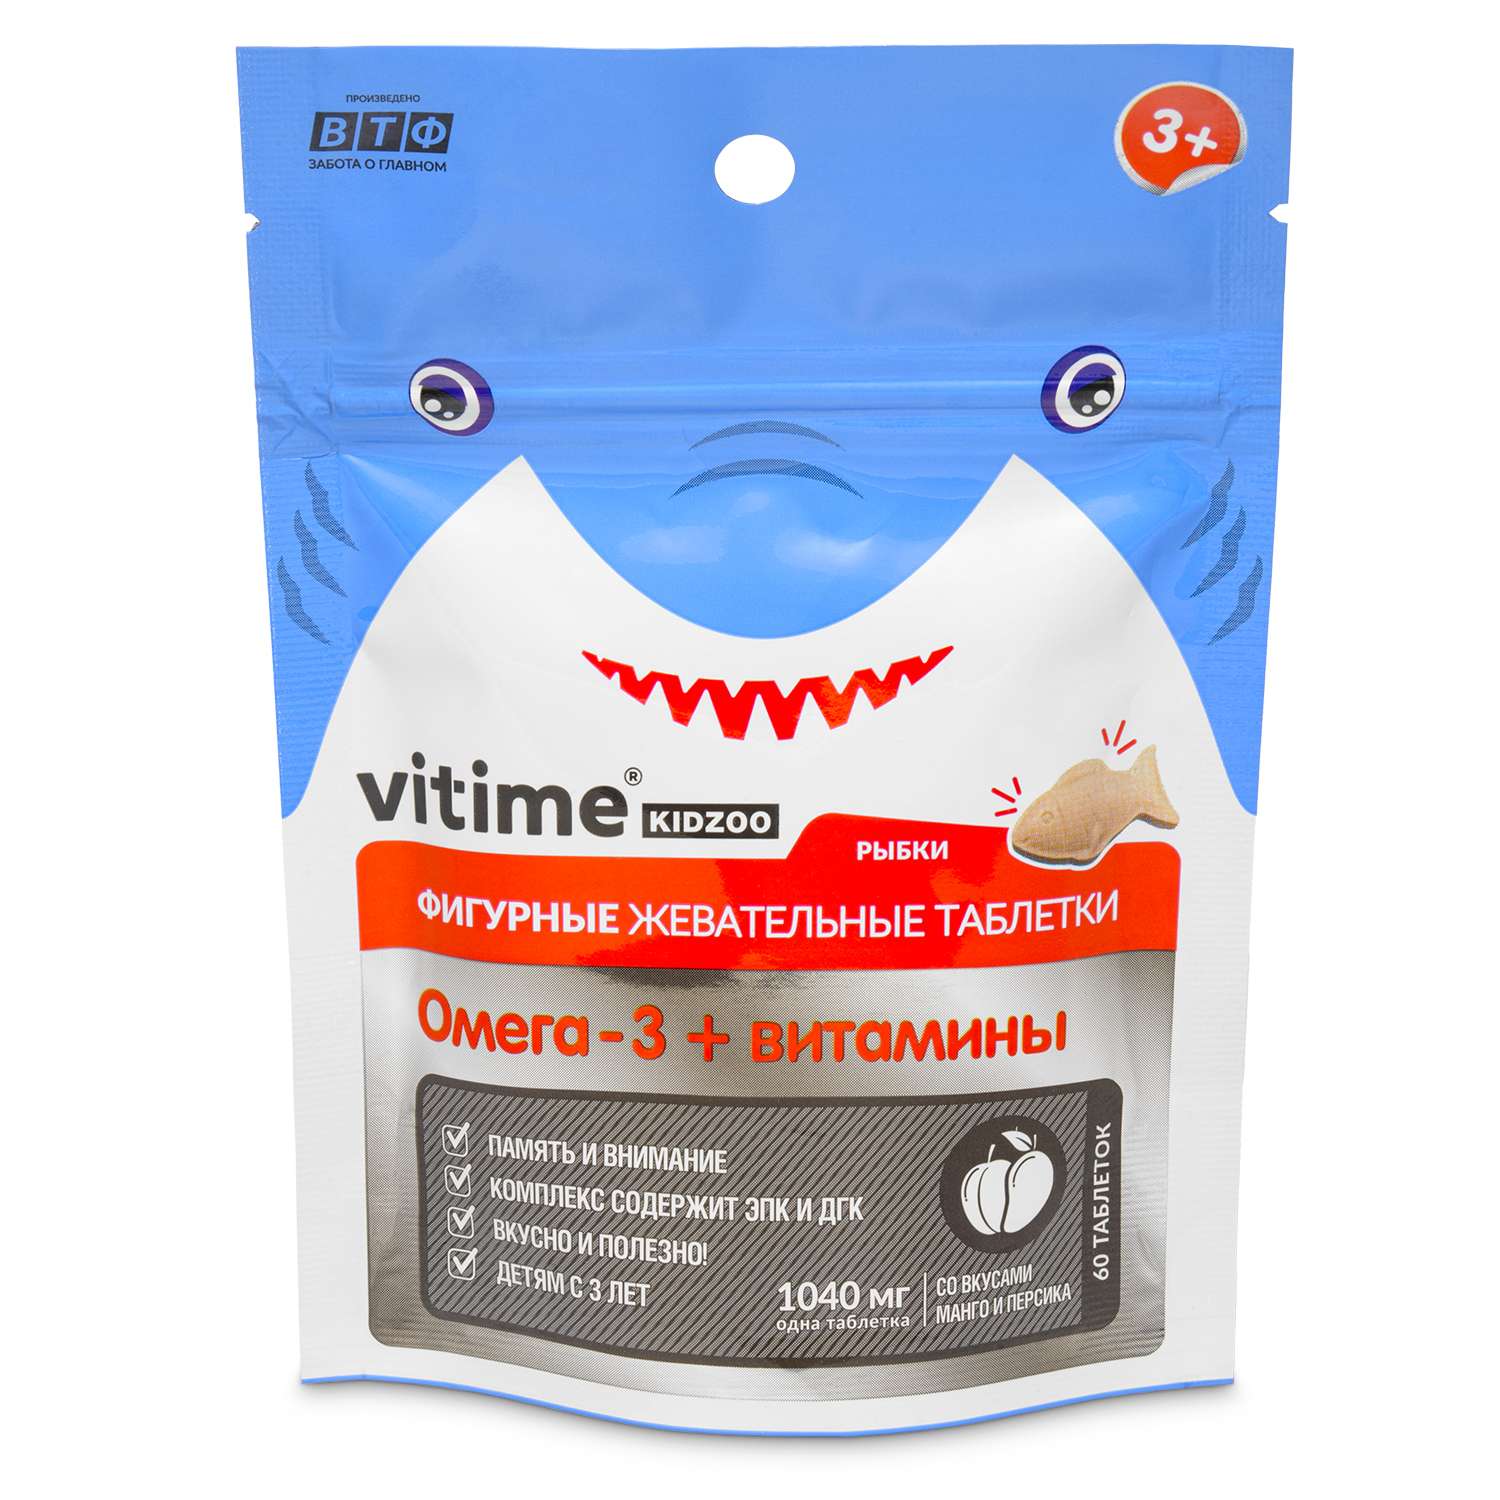 Биологически активная добавка Vitime Kidzoo Витамины+Омега-3 фигурные манго-персик 60таблеток - фото 1